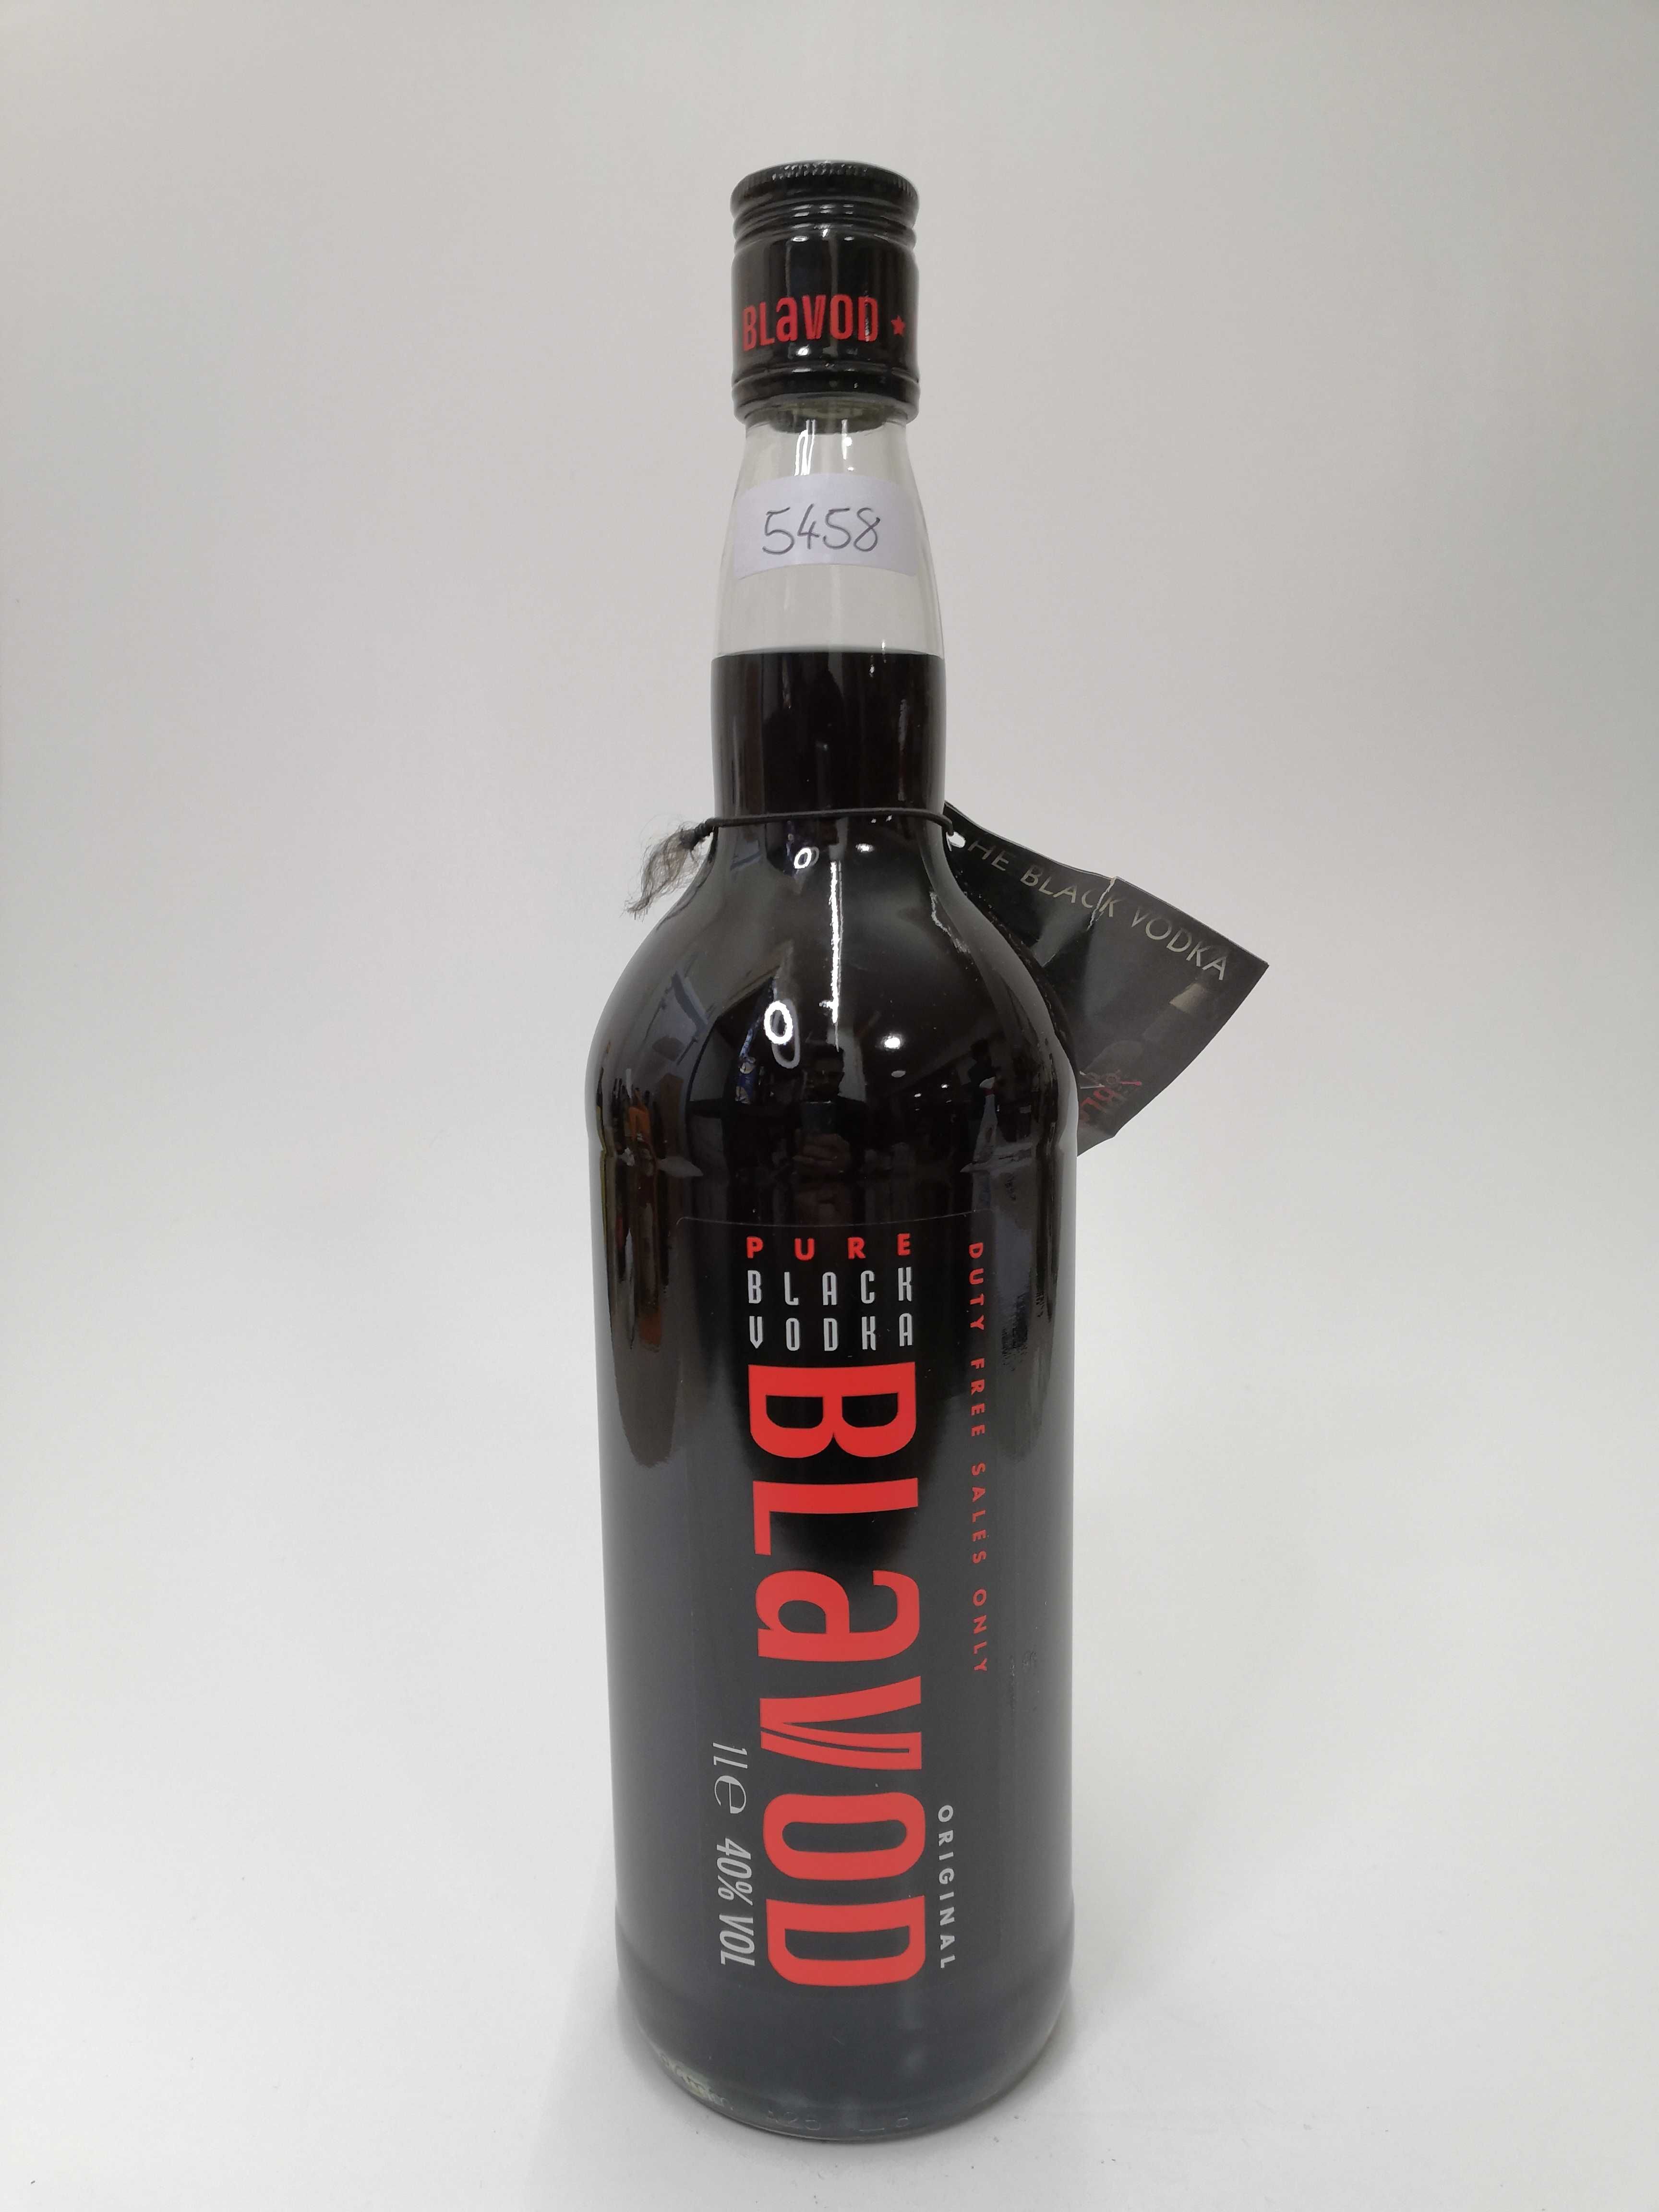 Vintage Bottle - Blavod Pure Black Vodka Duty Free 1 lt. - COD. 5458